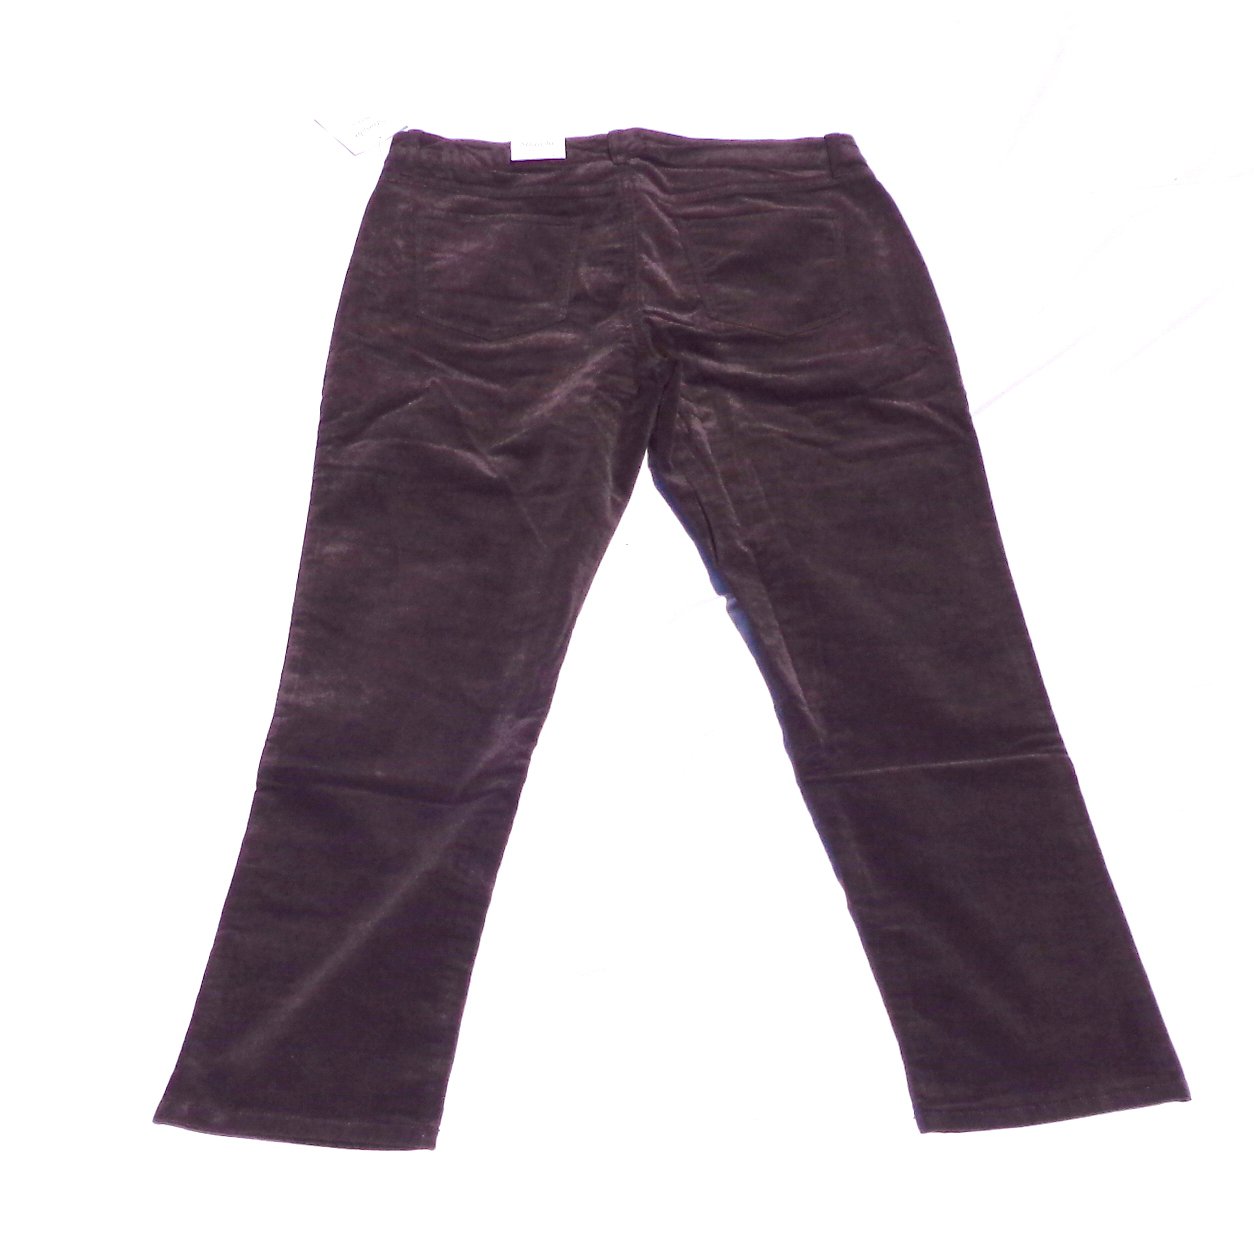 Dark Brown Straight Mid Rise Corduroy Croft & Barrow Pants Jeans 14 S